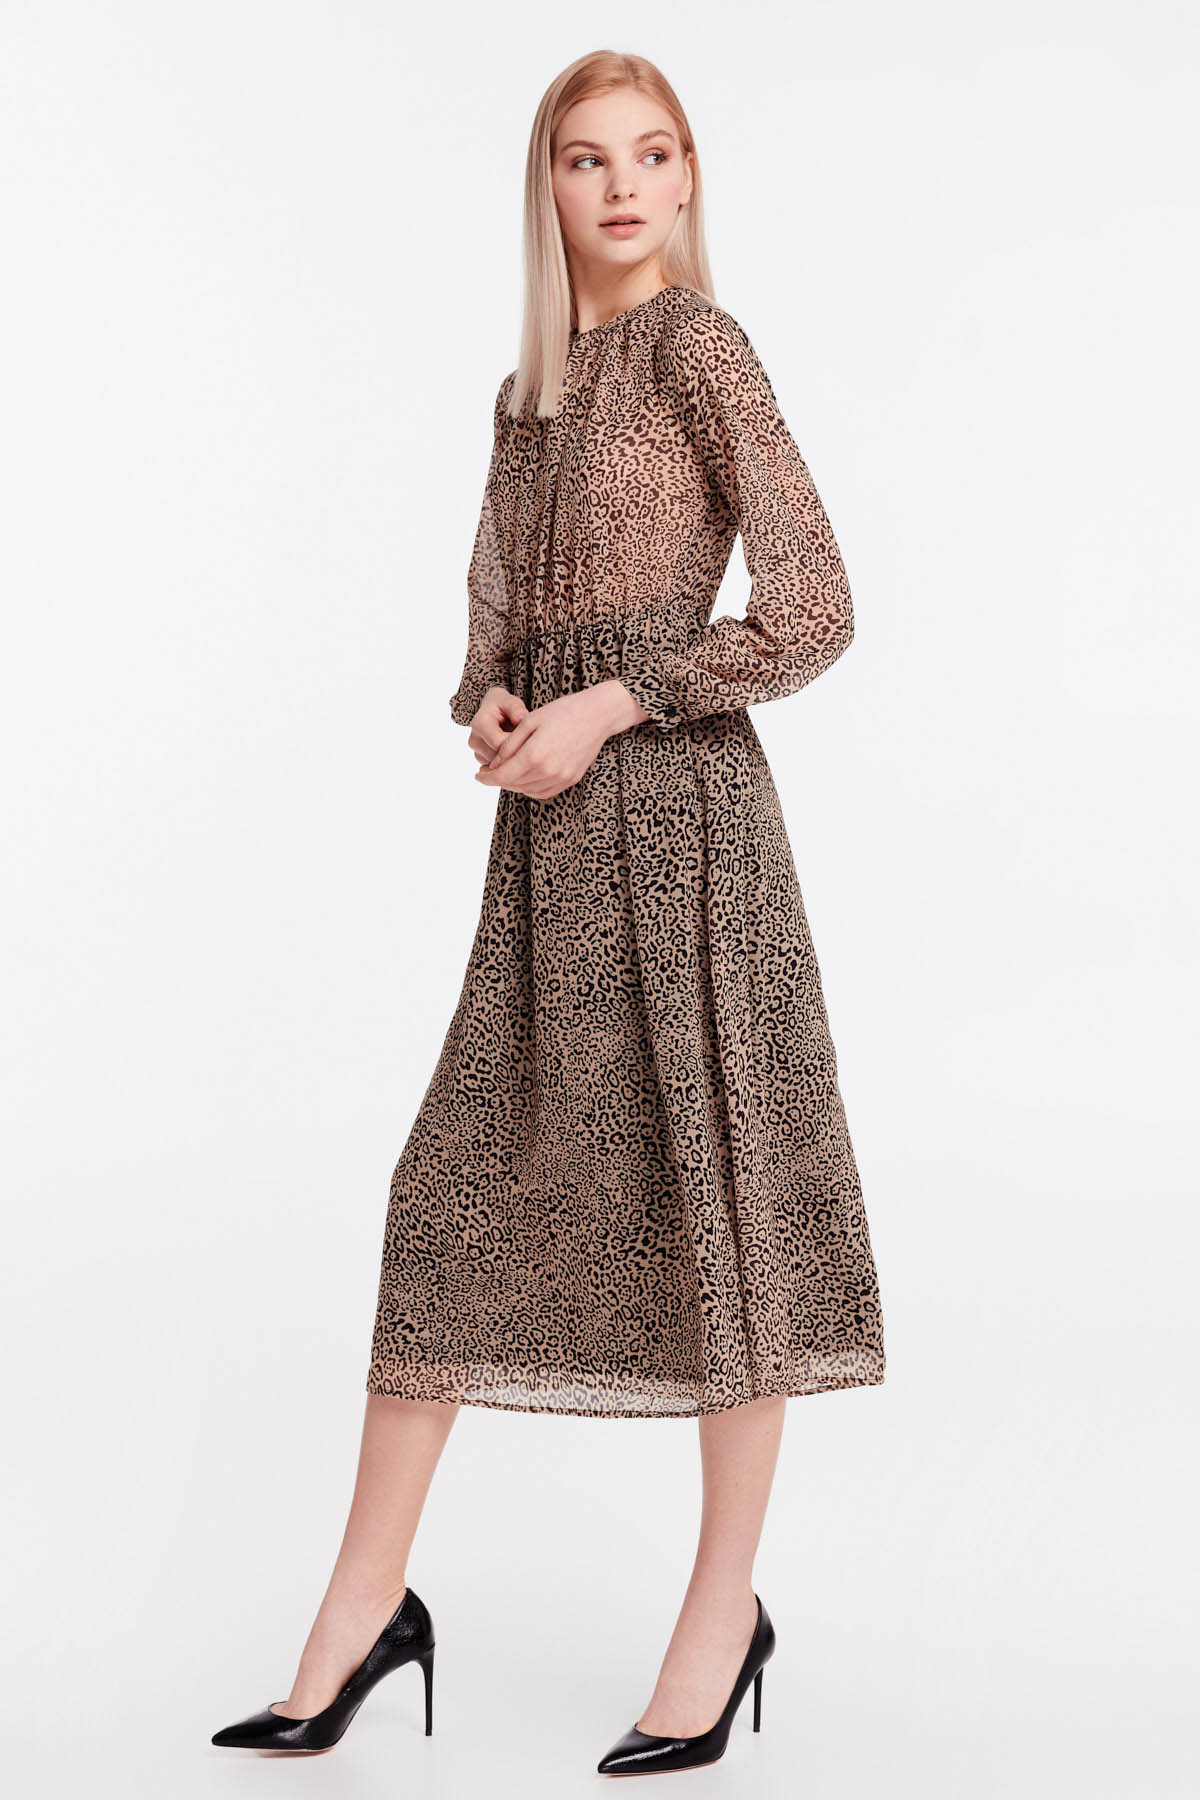 Midi dress with leopard print, photo 4